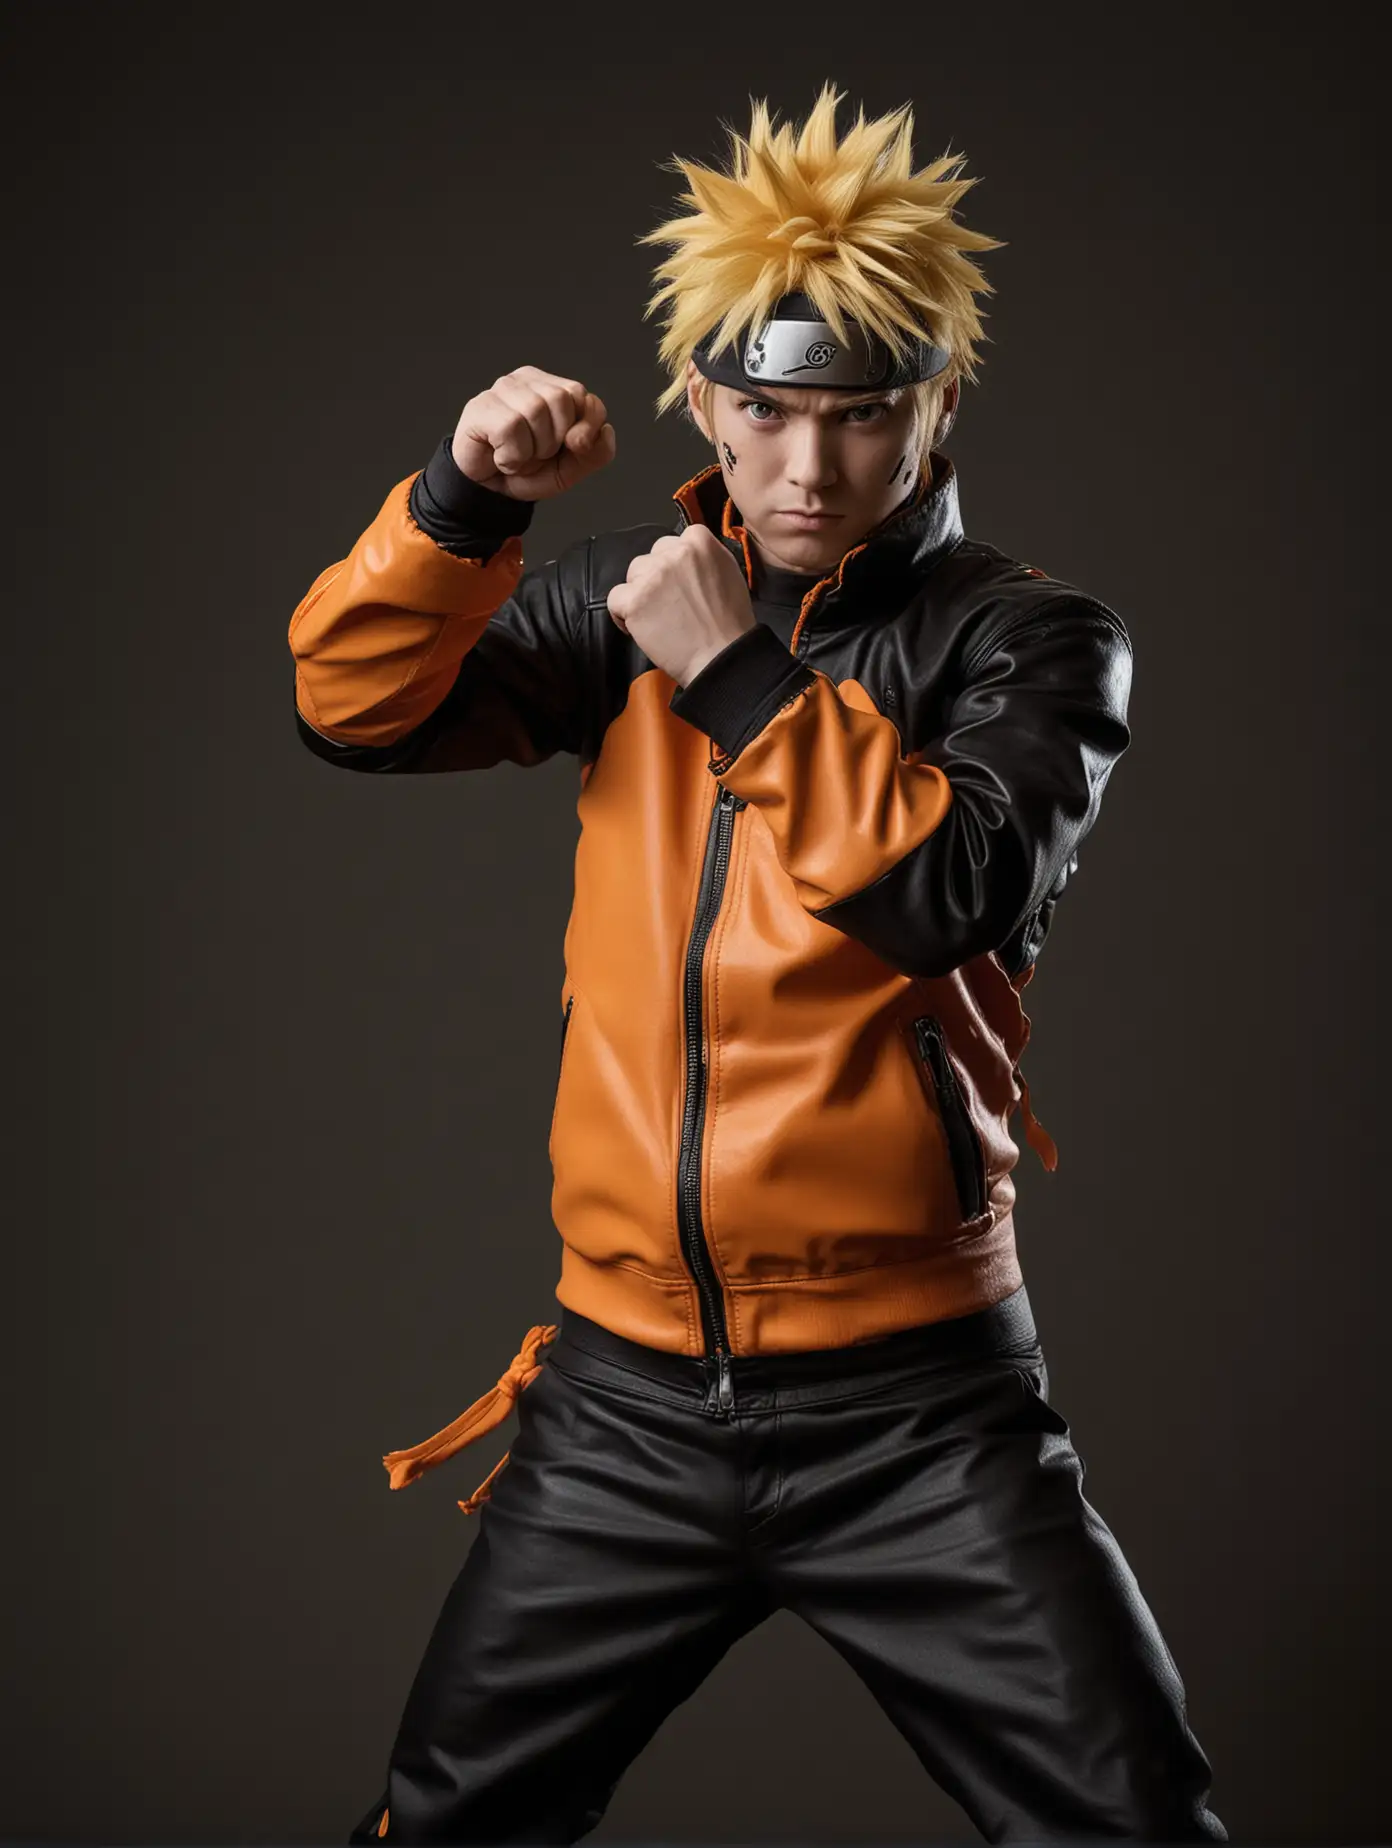 Naruto Cosplay Portrait Action Pose with Studio Lighting